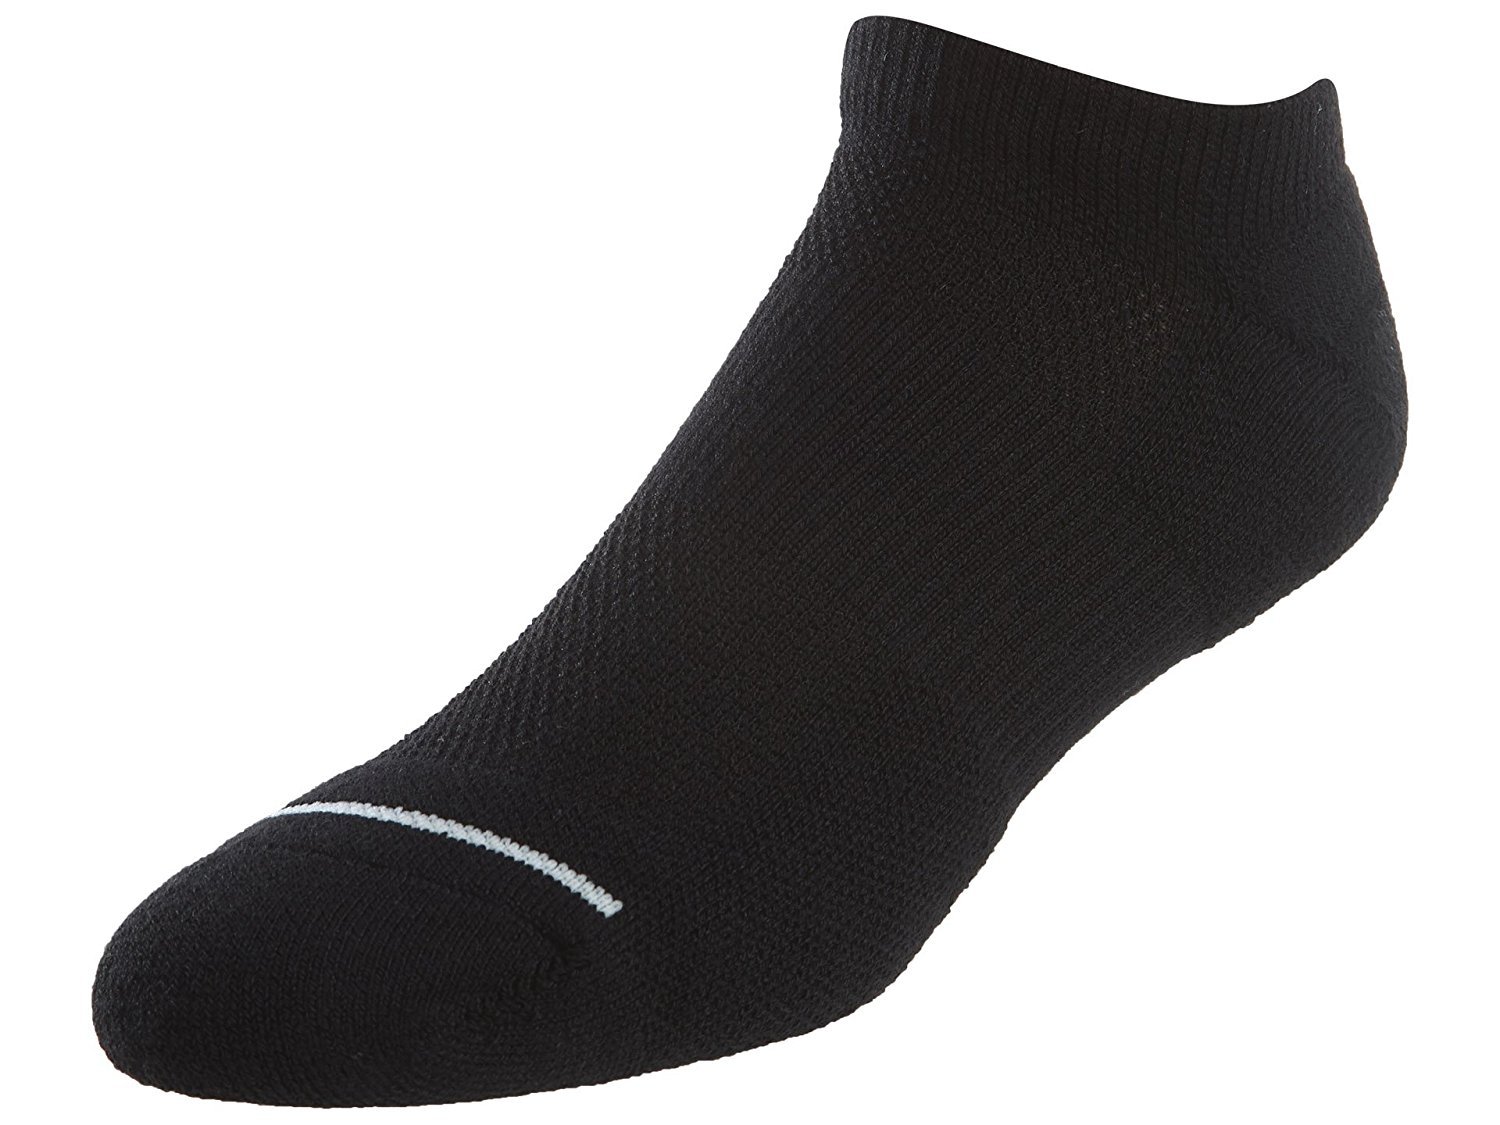 Nike Mens 3-Pack Jordan Jumpman No-Show Socks Black/White SX5546-010 | eBay